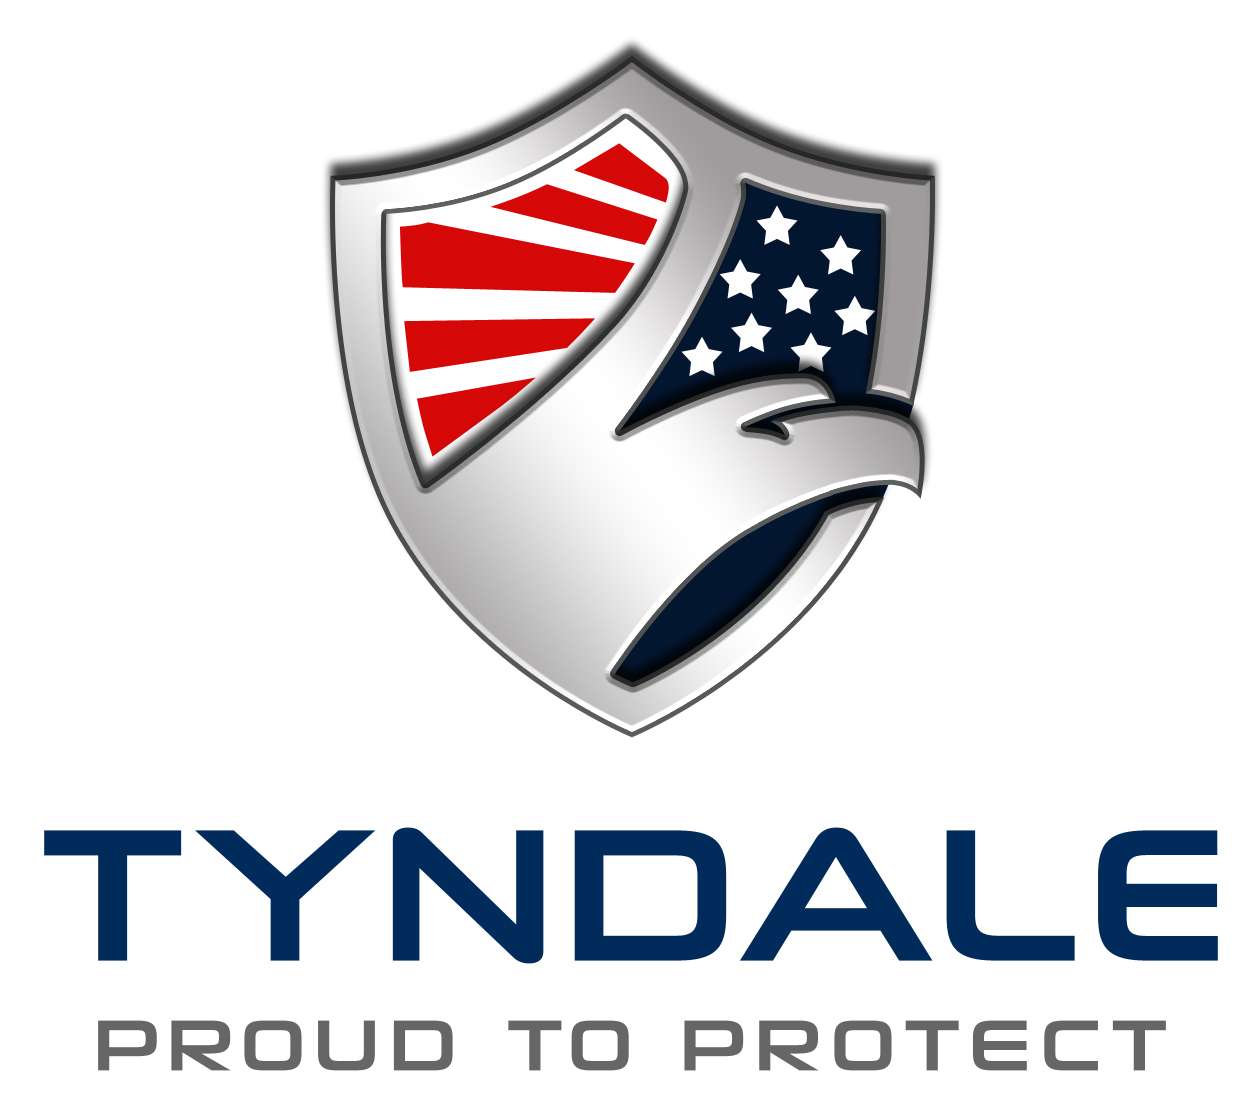 Tyndale Logo